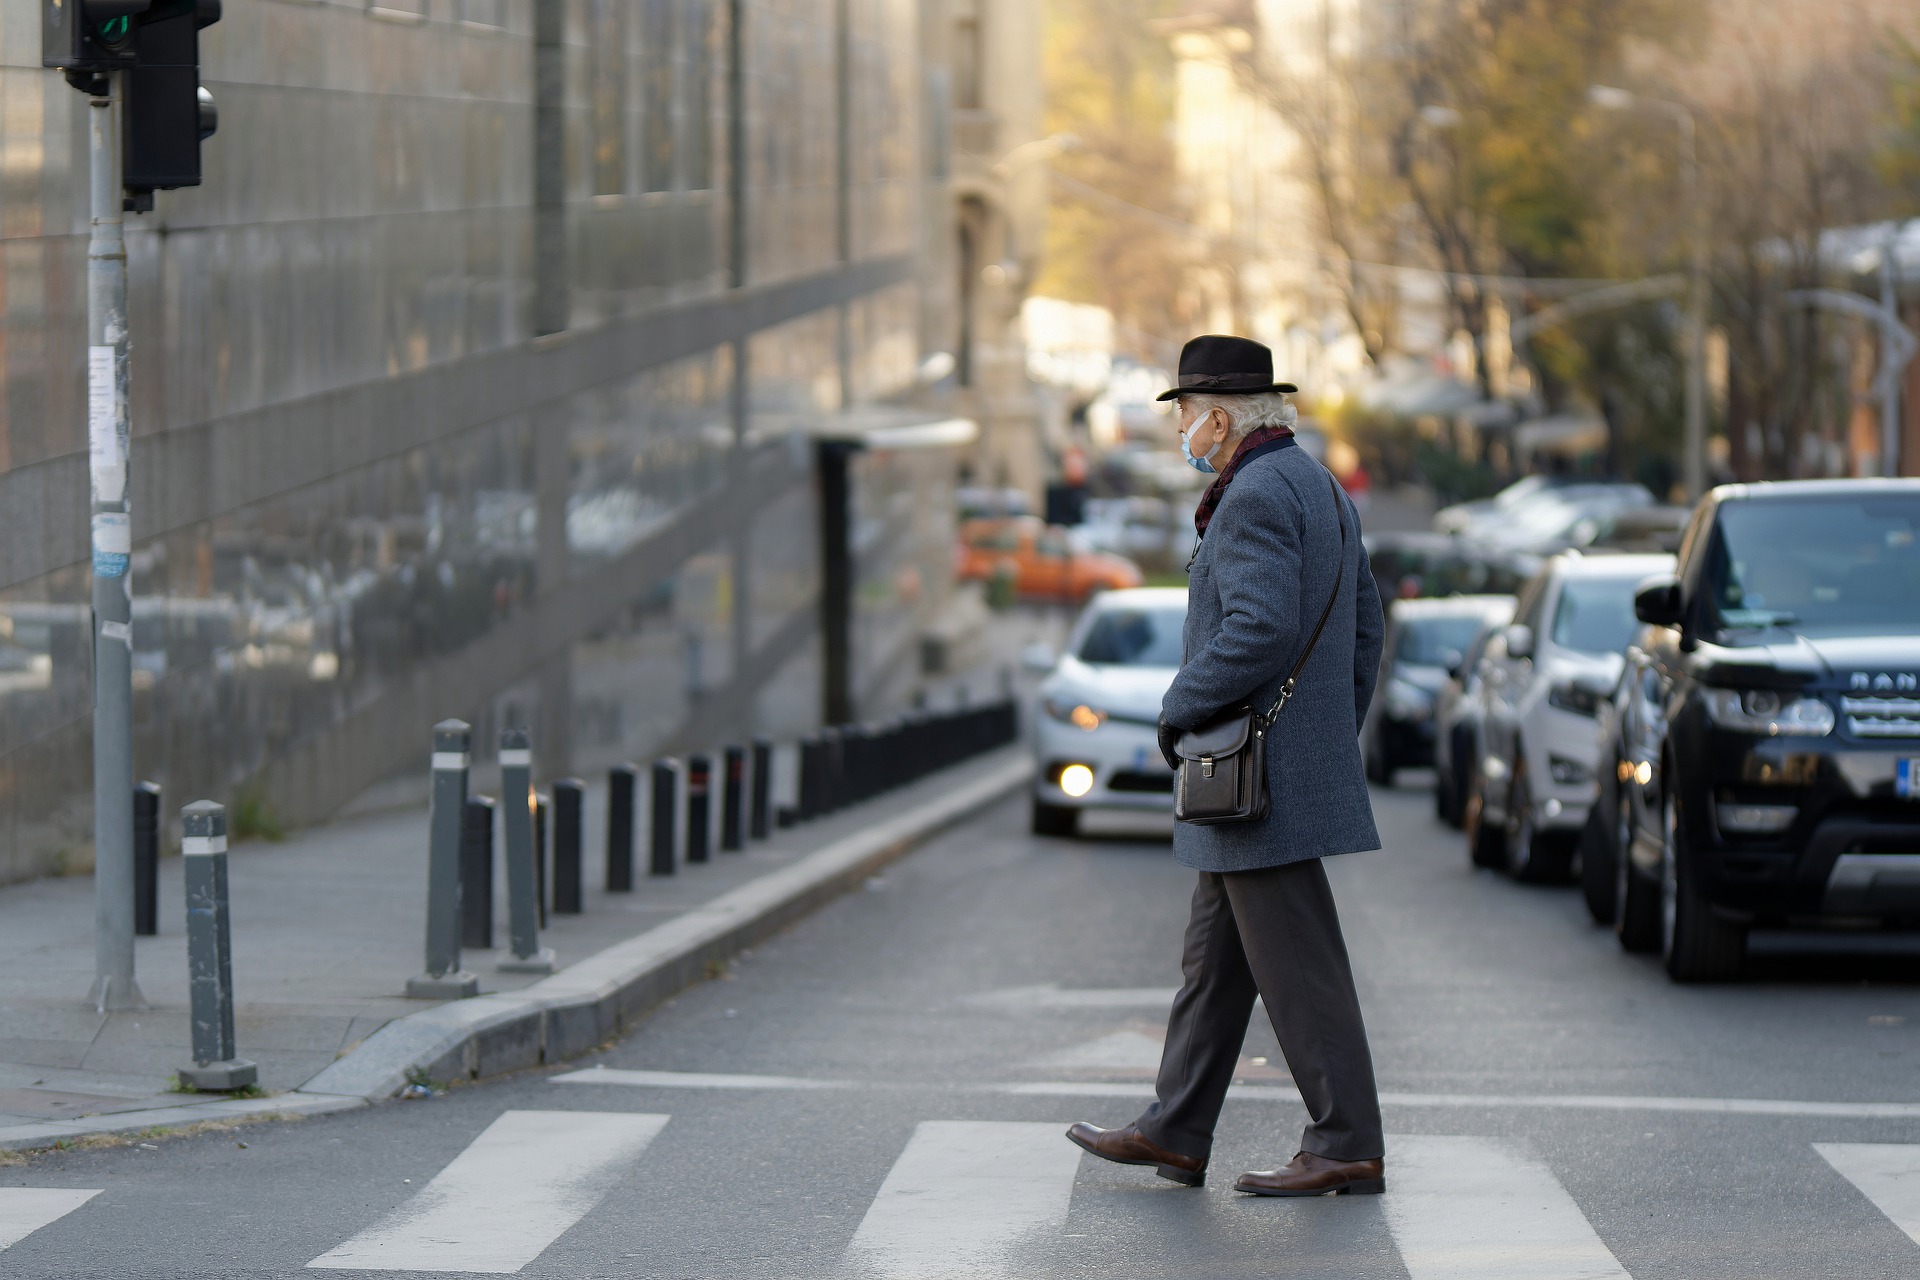 An elderly man crossing the street at a crosswalk.